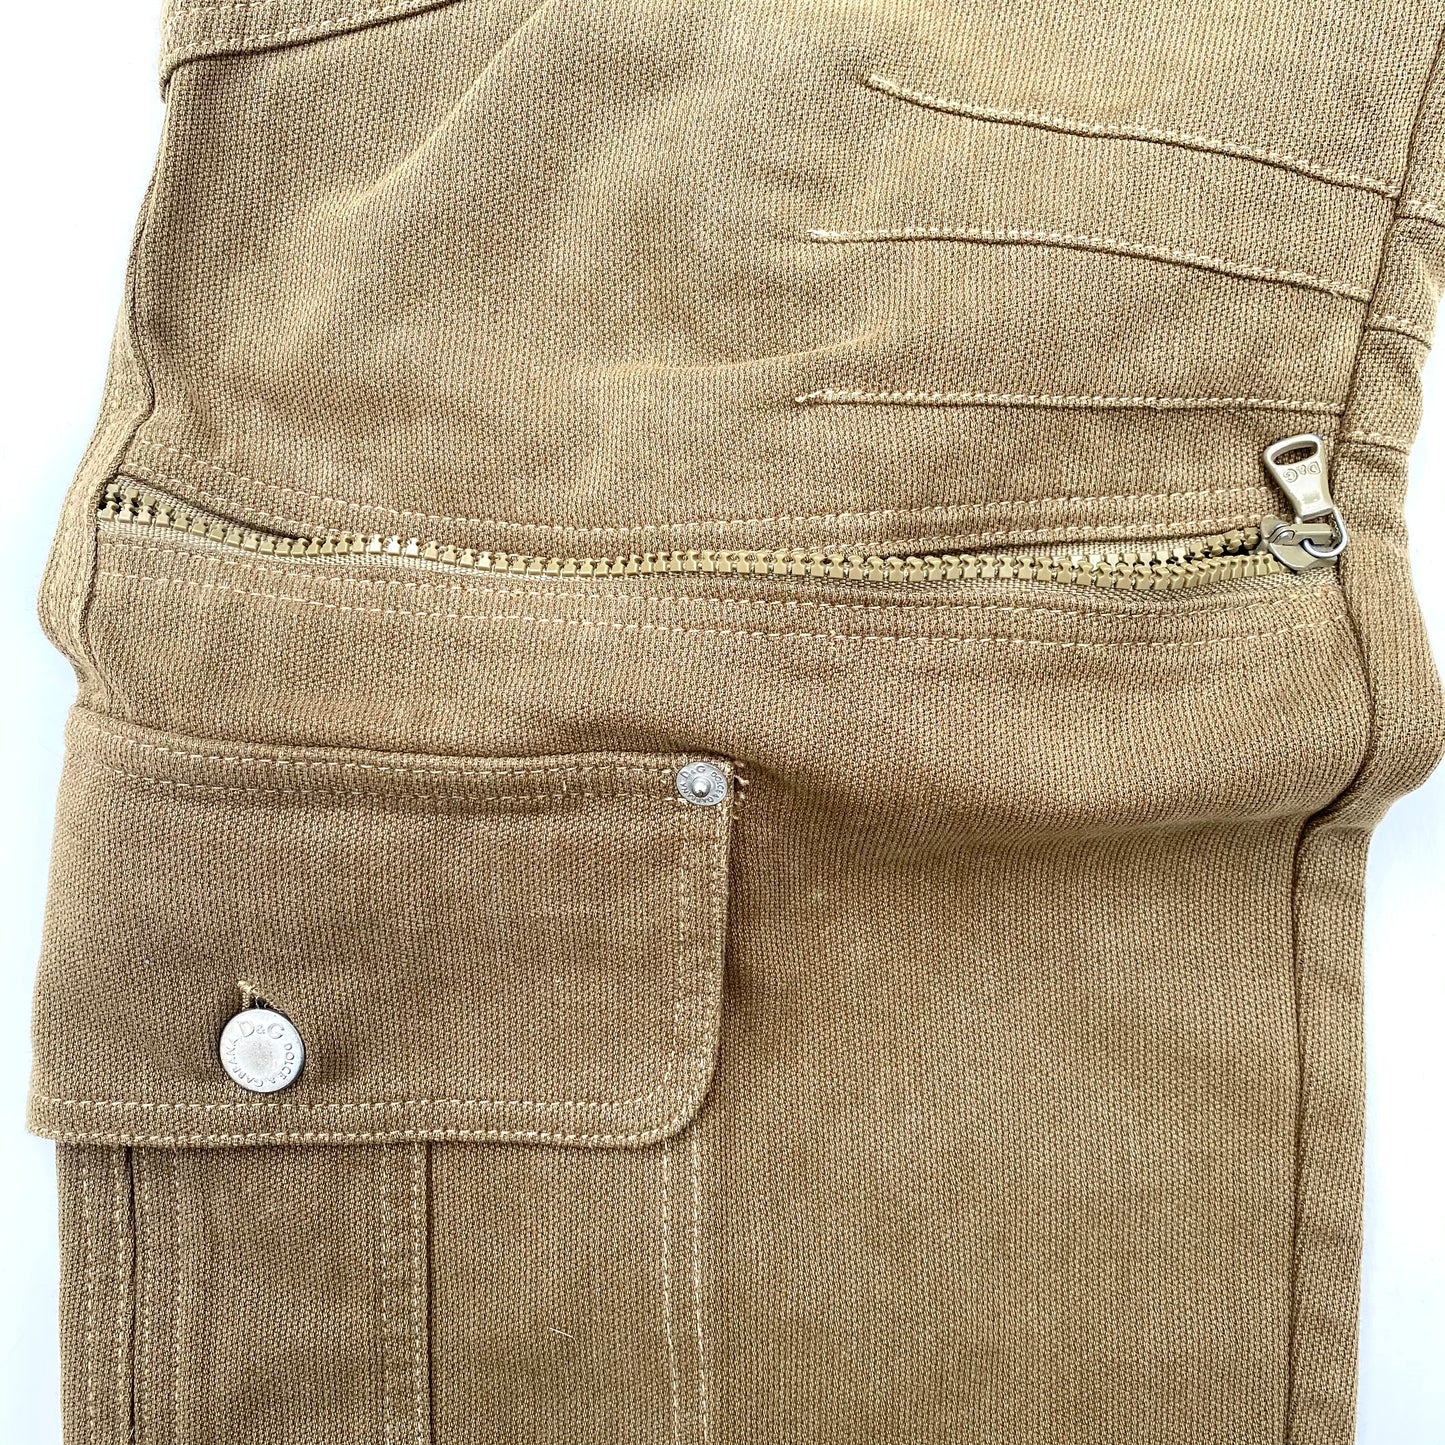 Dolce & Gabbana Archives 2000 Cargo Pants